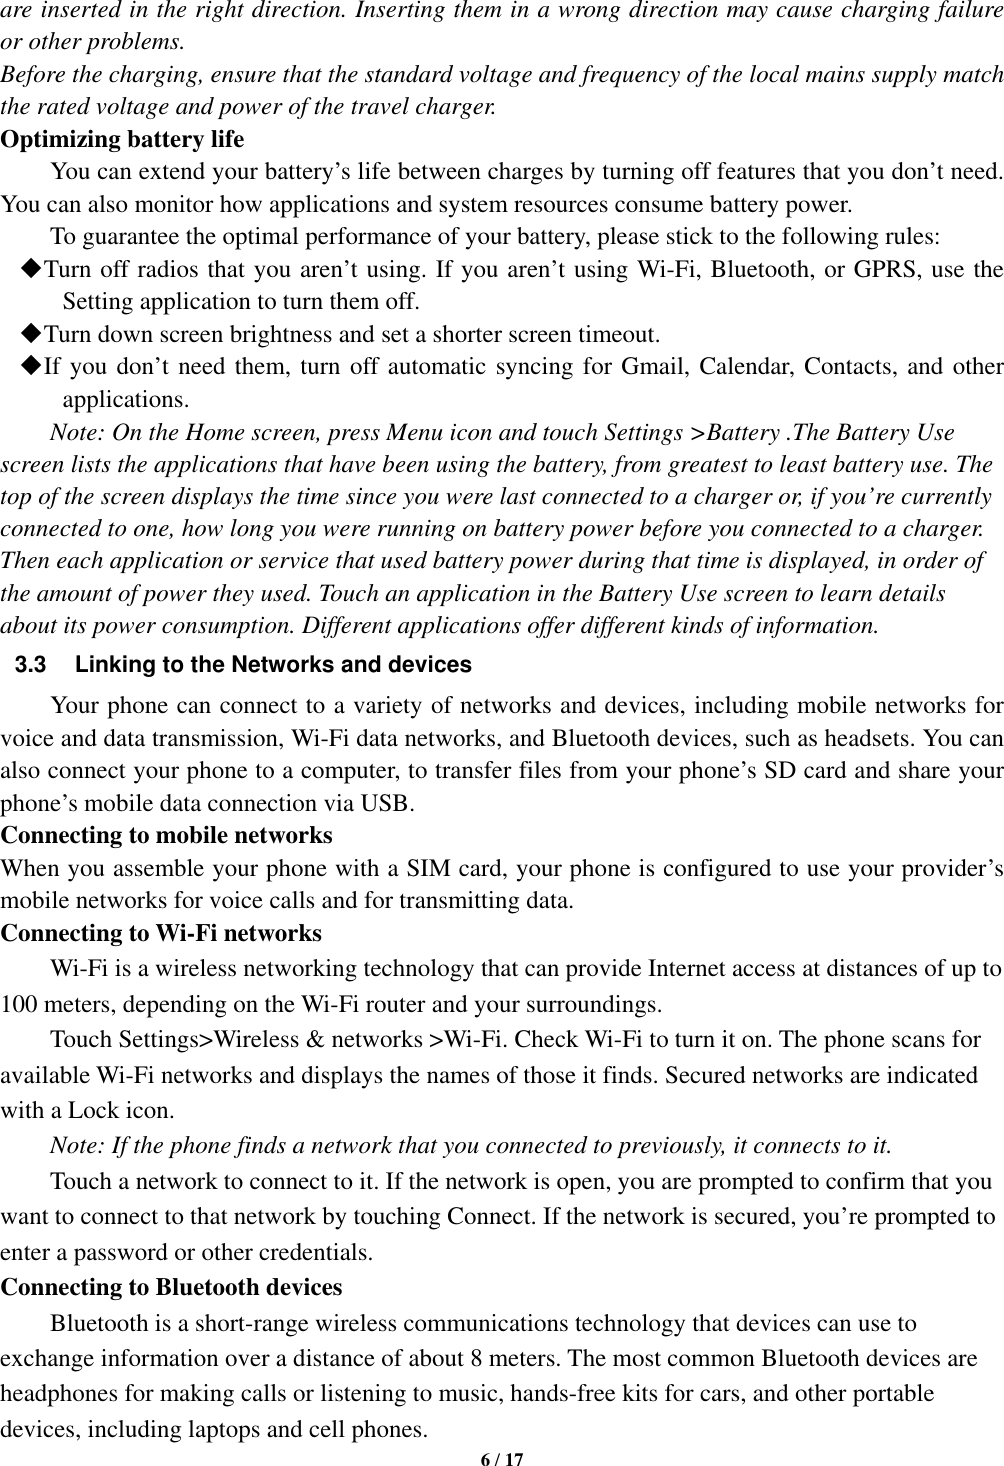 Page 6 of Sky Phone SKYELITEA55 4G Smart Phone User Manual